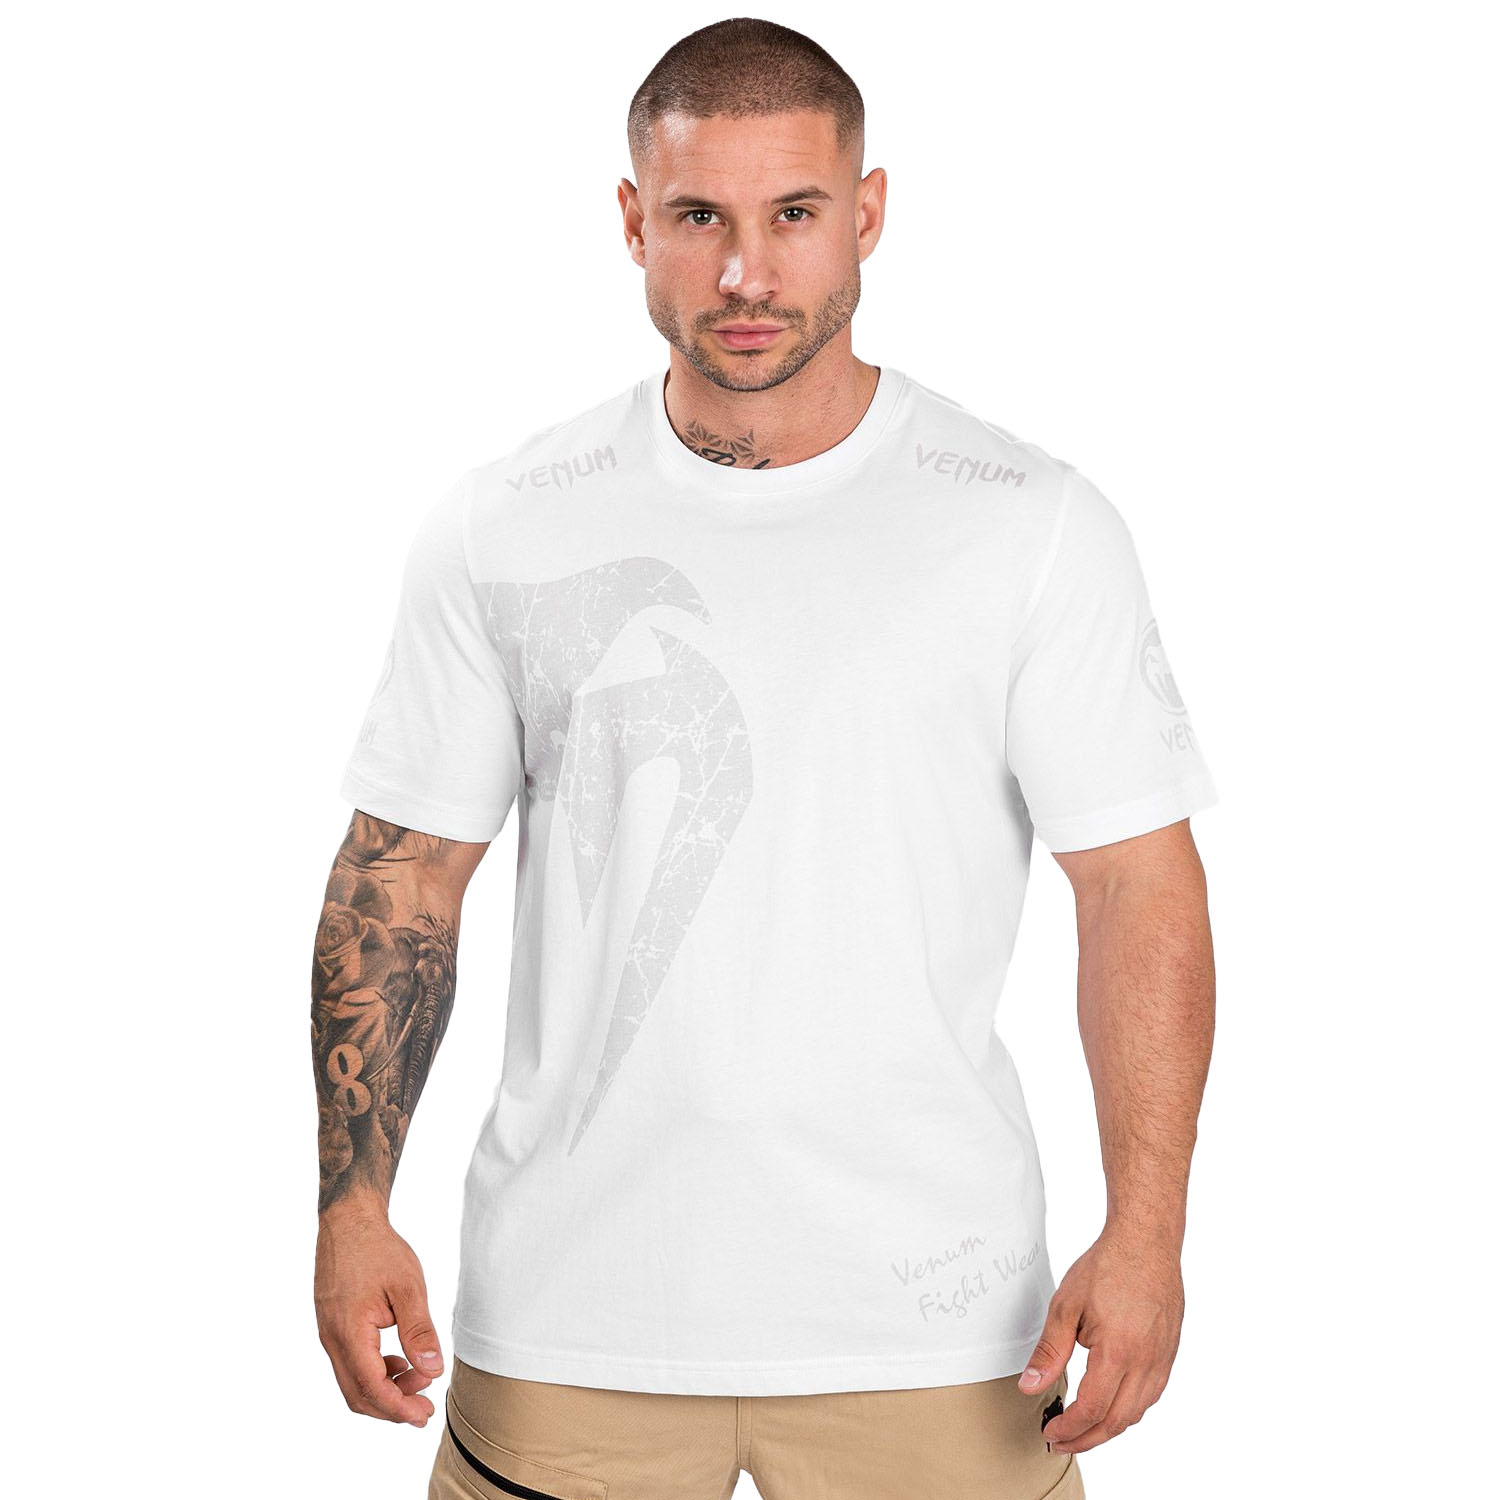 VENUM T-Shirt, Giant, weiß, L